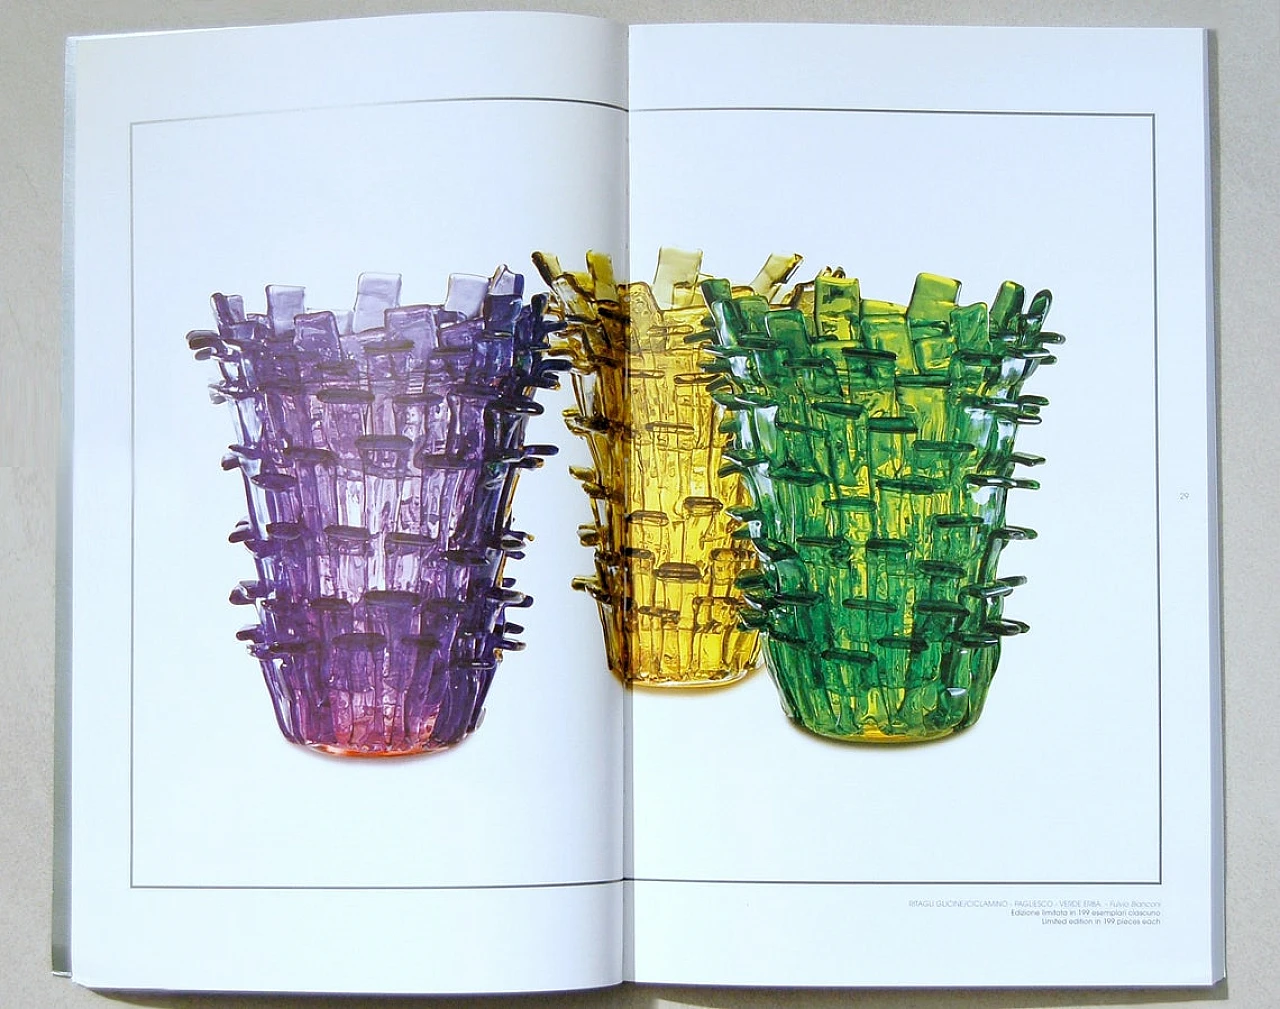 Straw yellow Ritagli vase by Fulvio Bianconi for Venini, 2002 8